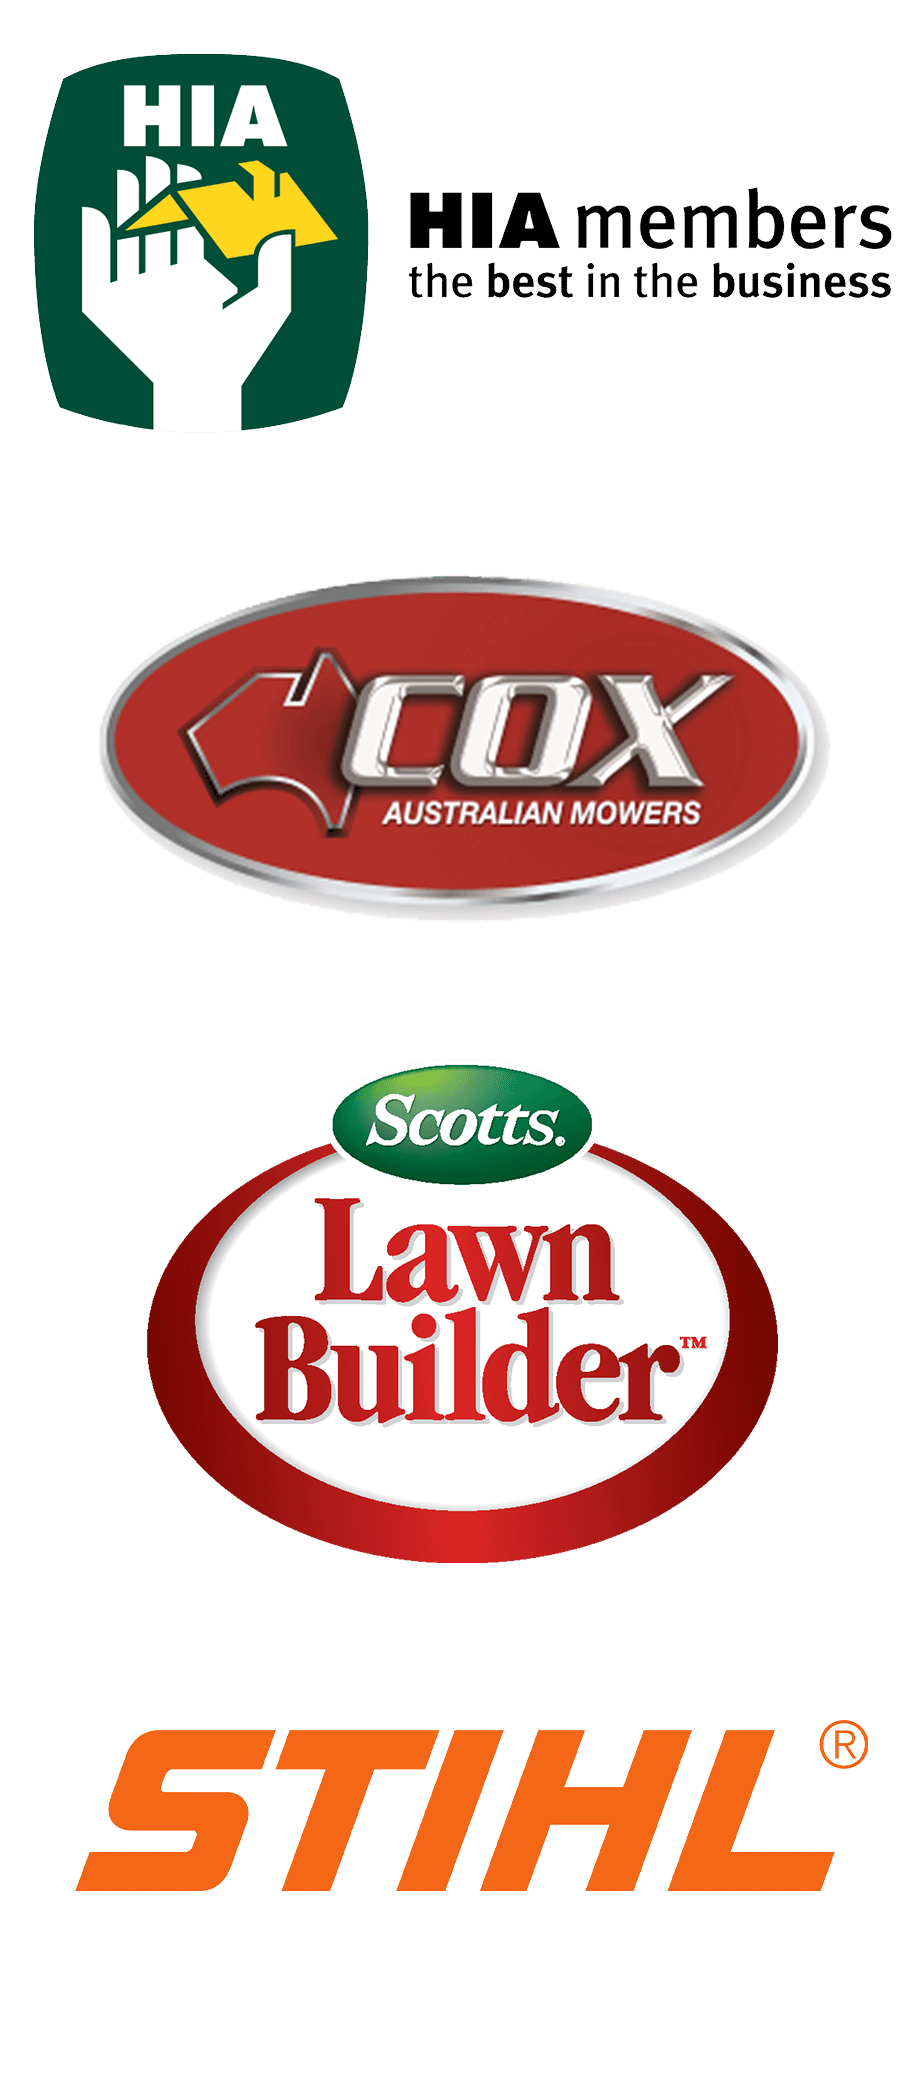 Lawn Care Maintenance Company NSW